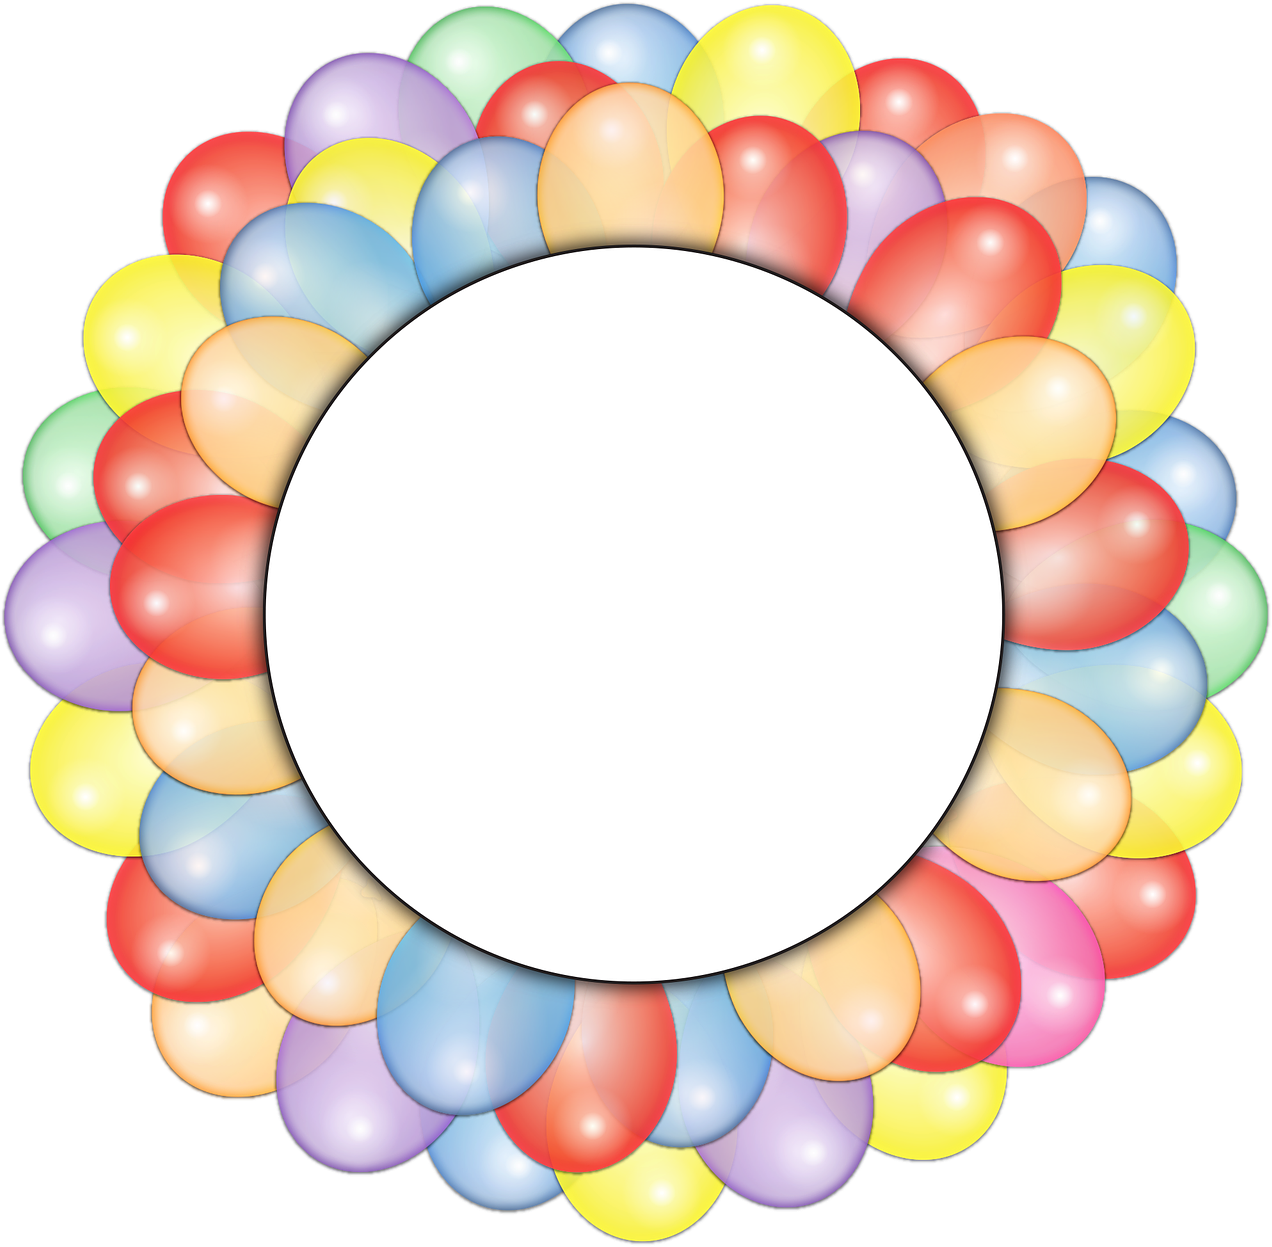 Vacation, Balloons, Circle, Frame, Copy Space - Steigt Geburtstags-party Im Ballon Auf Runder Aufkleber (1280x1280)